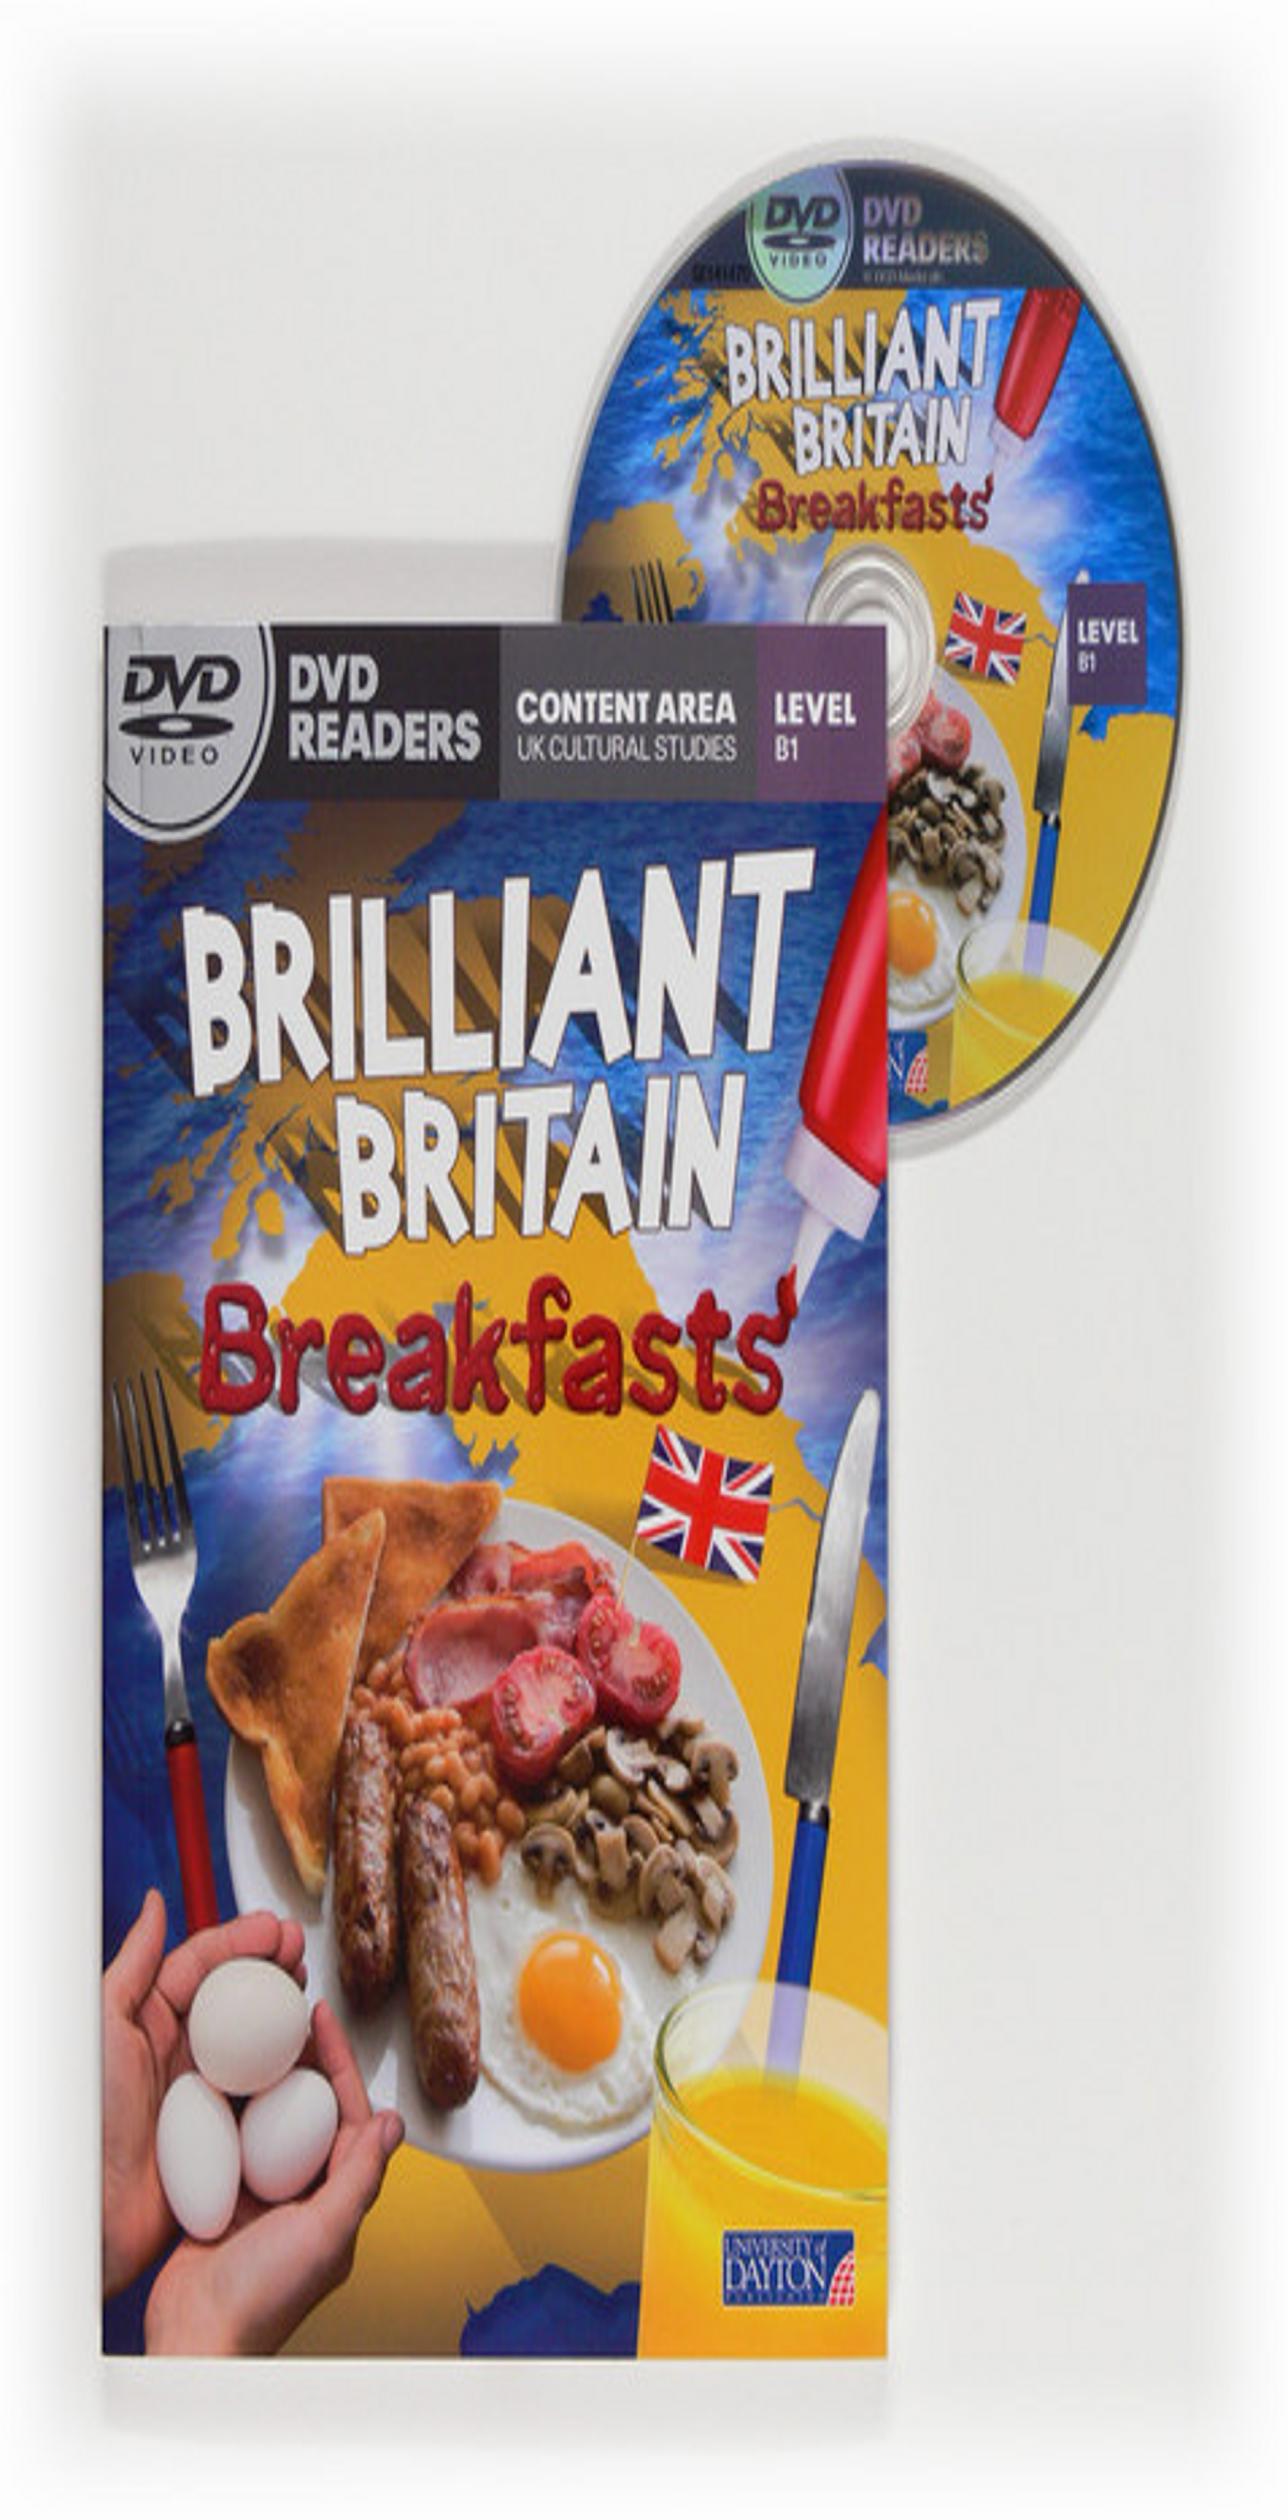 BREAKFASTS: Brilliant Britain - DVD READERS Level B1